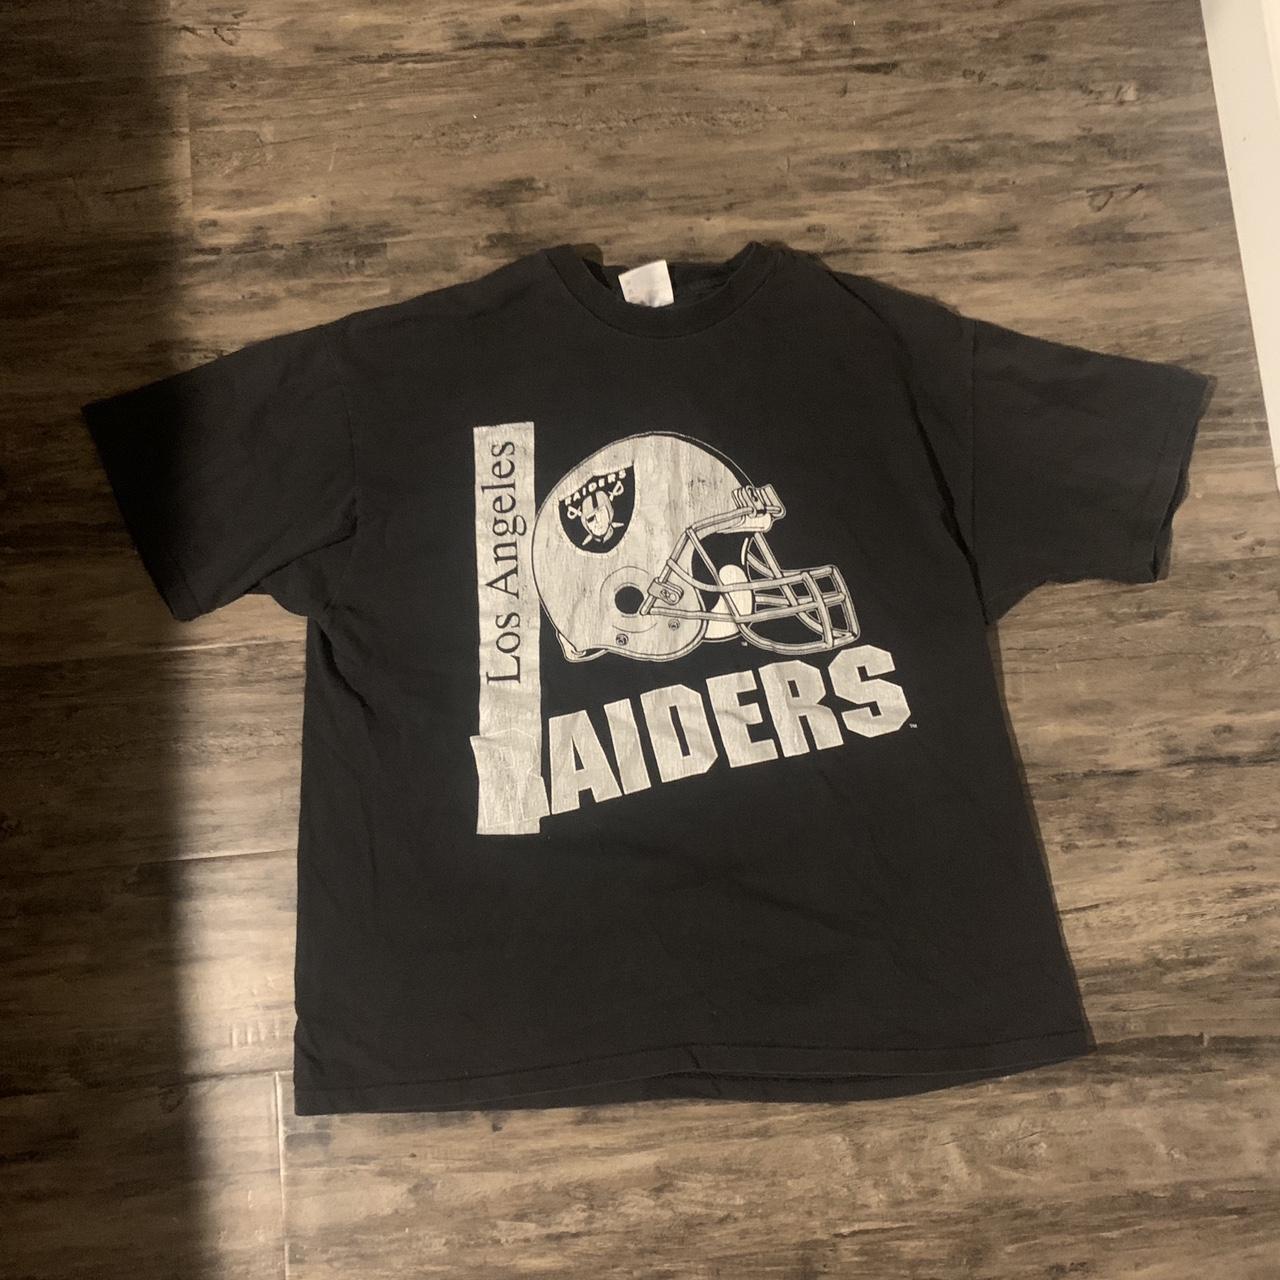 Vintage Los Angeles Raiders Shirt XL No stains no... - Depop